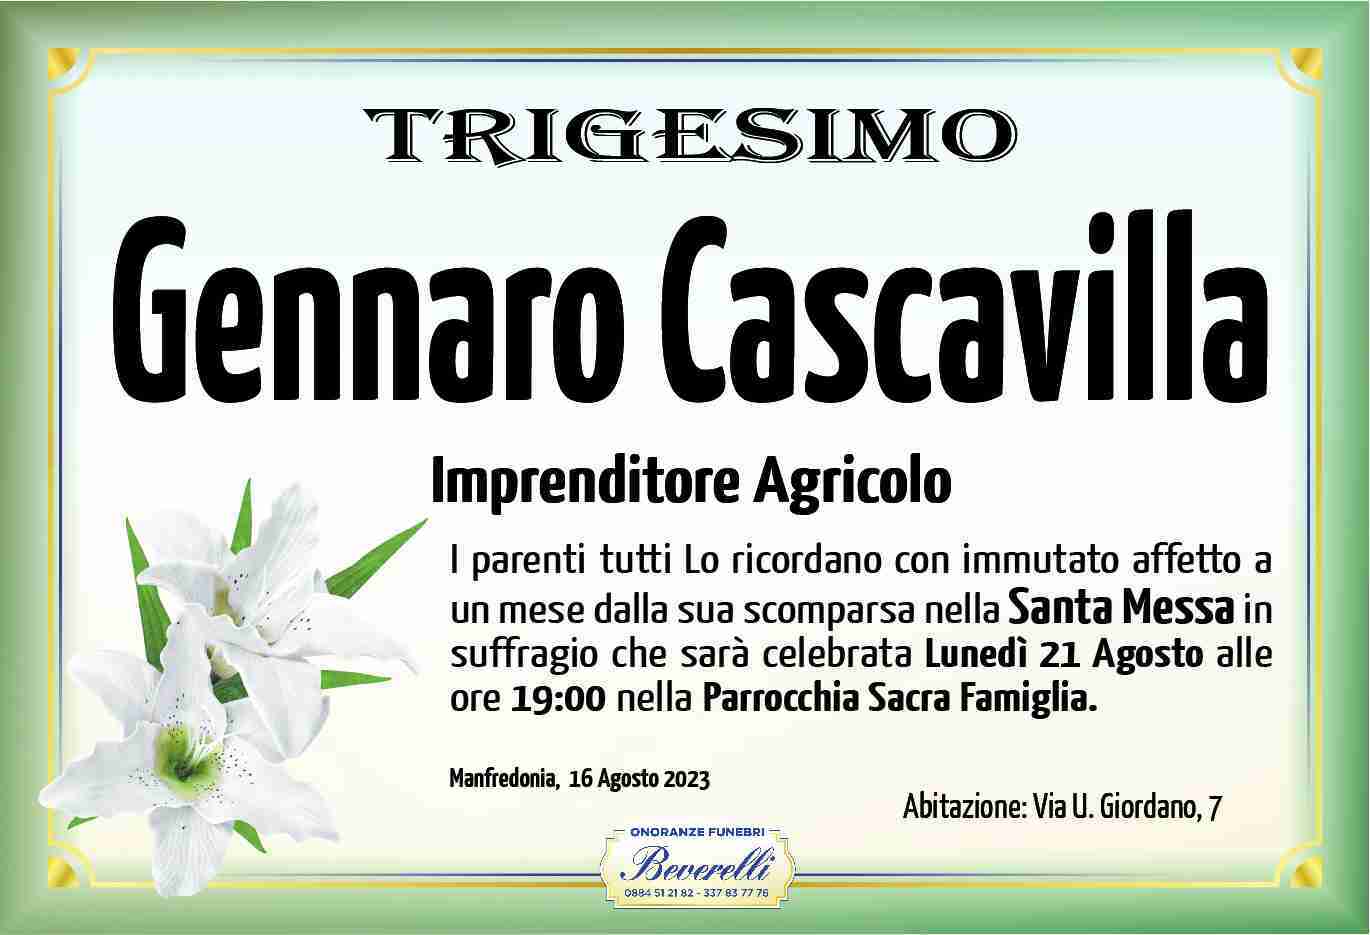 Gennaro Cascavilla